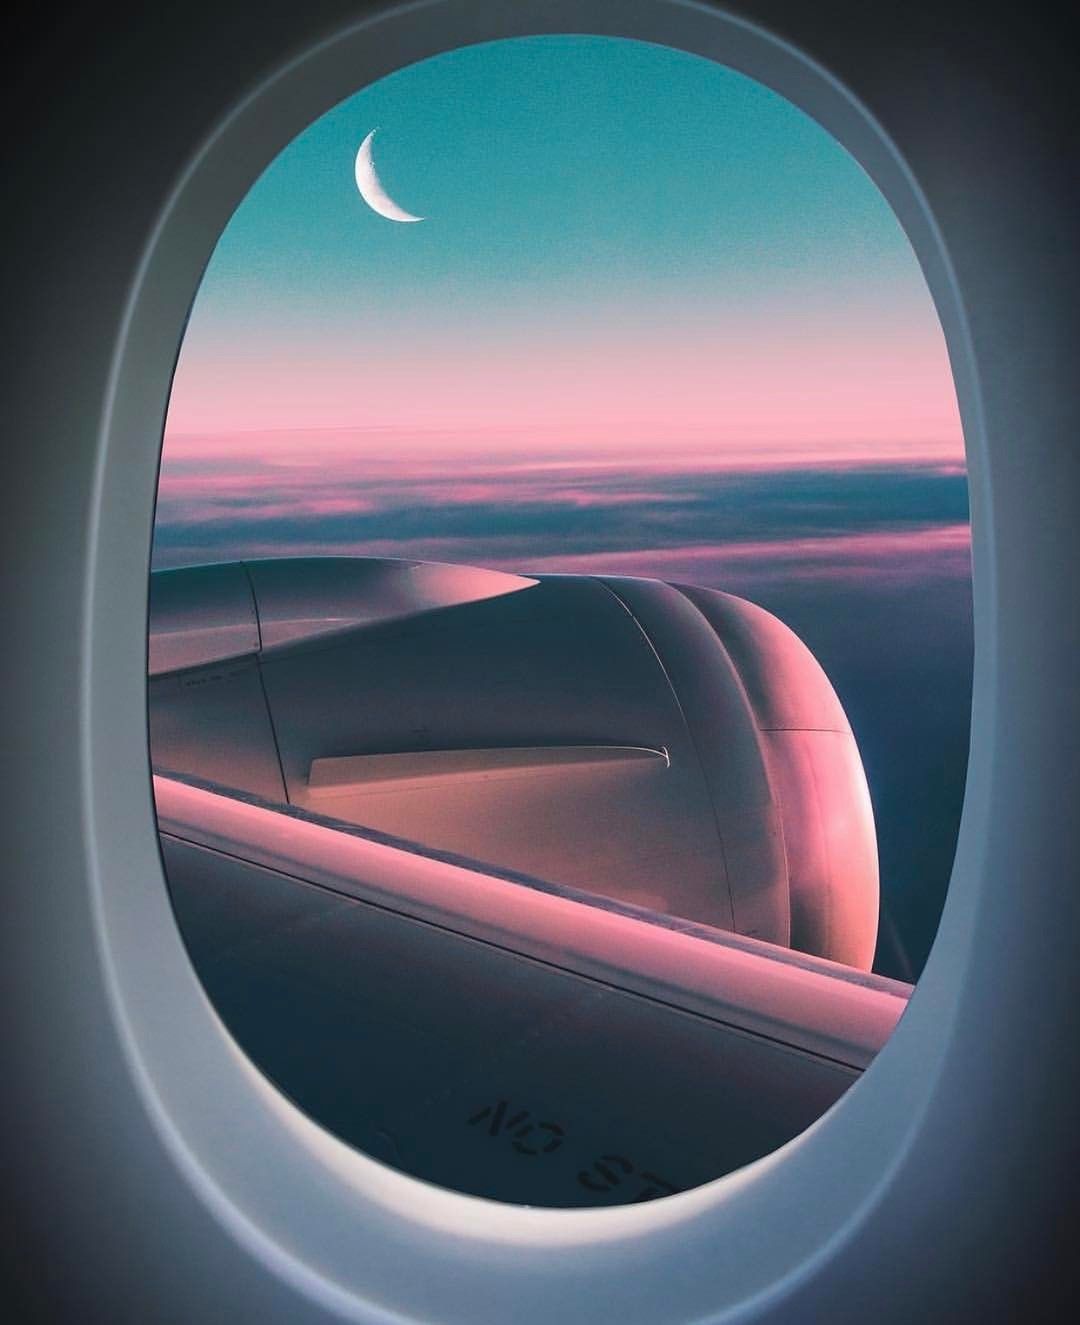 airplane window. Airplane photography, Airplane window, Airplane drawing